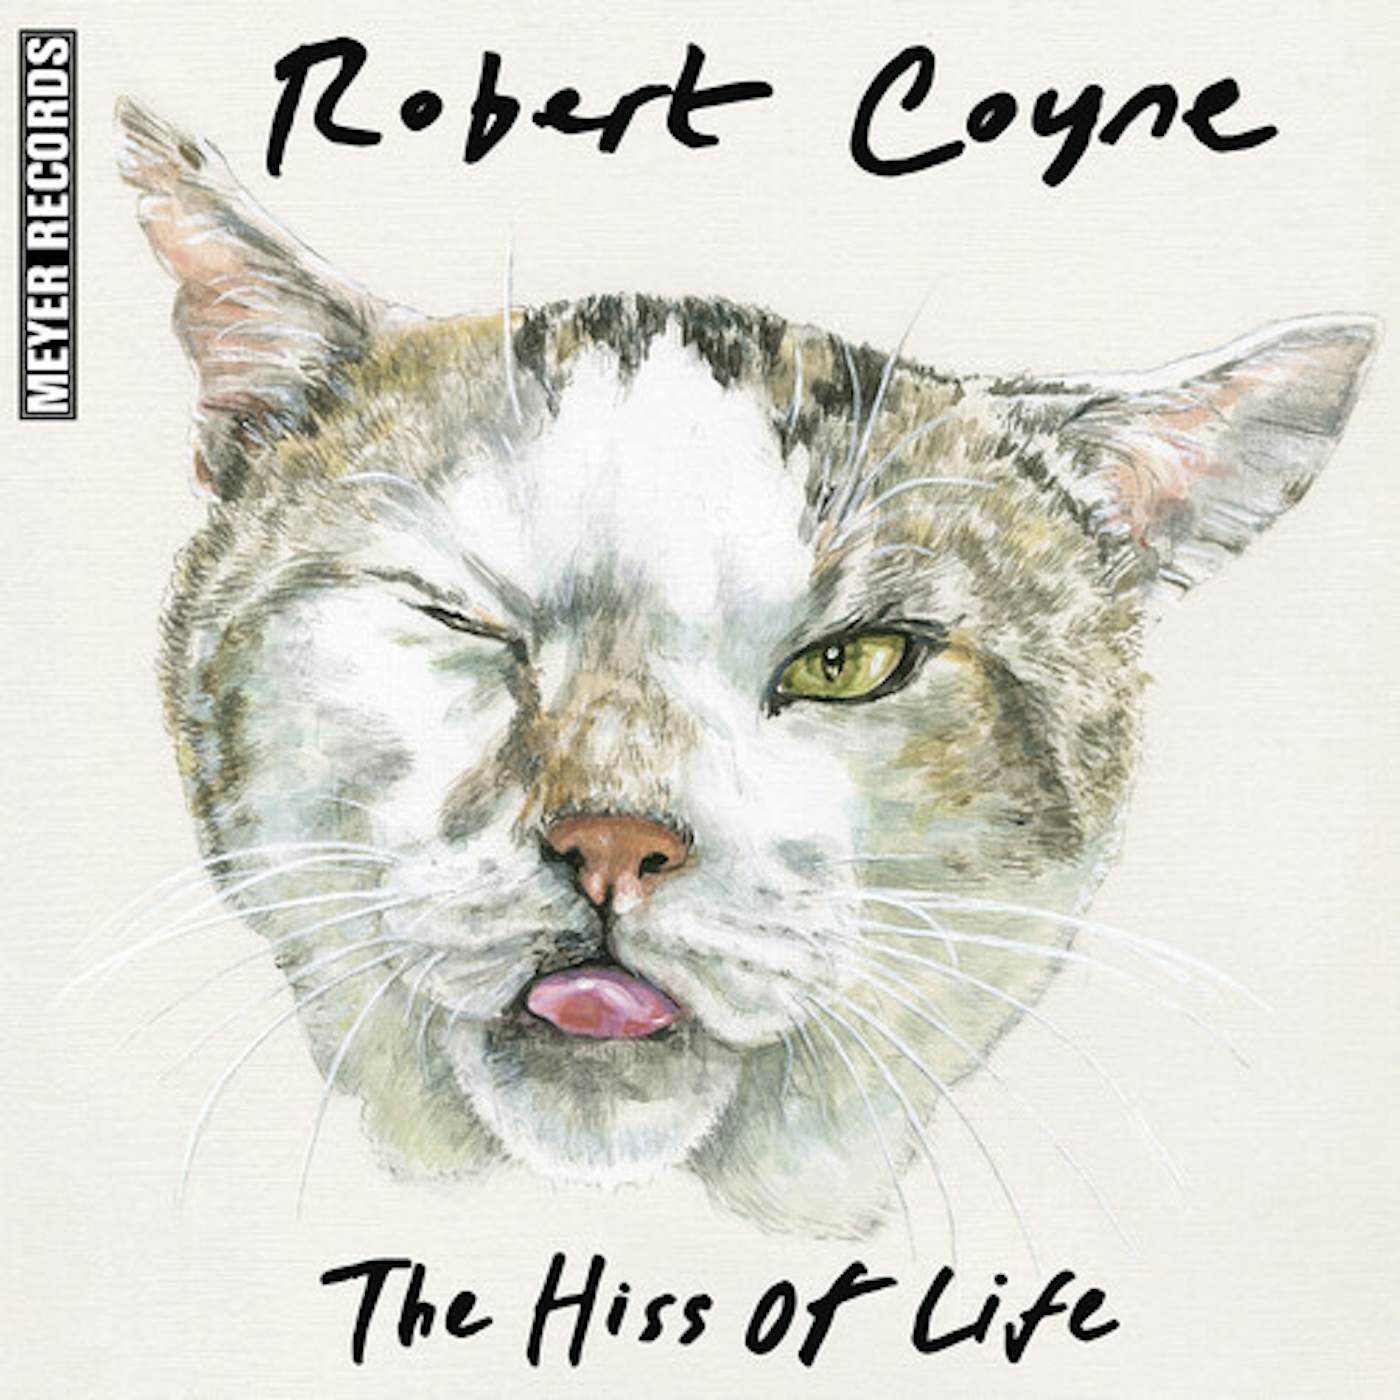 Robert Coyne HISS OF LIFE CD